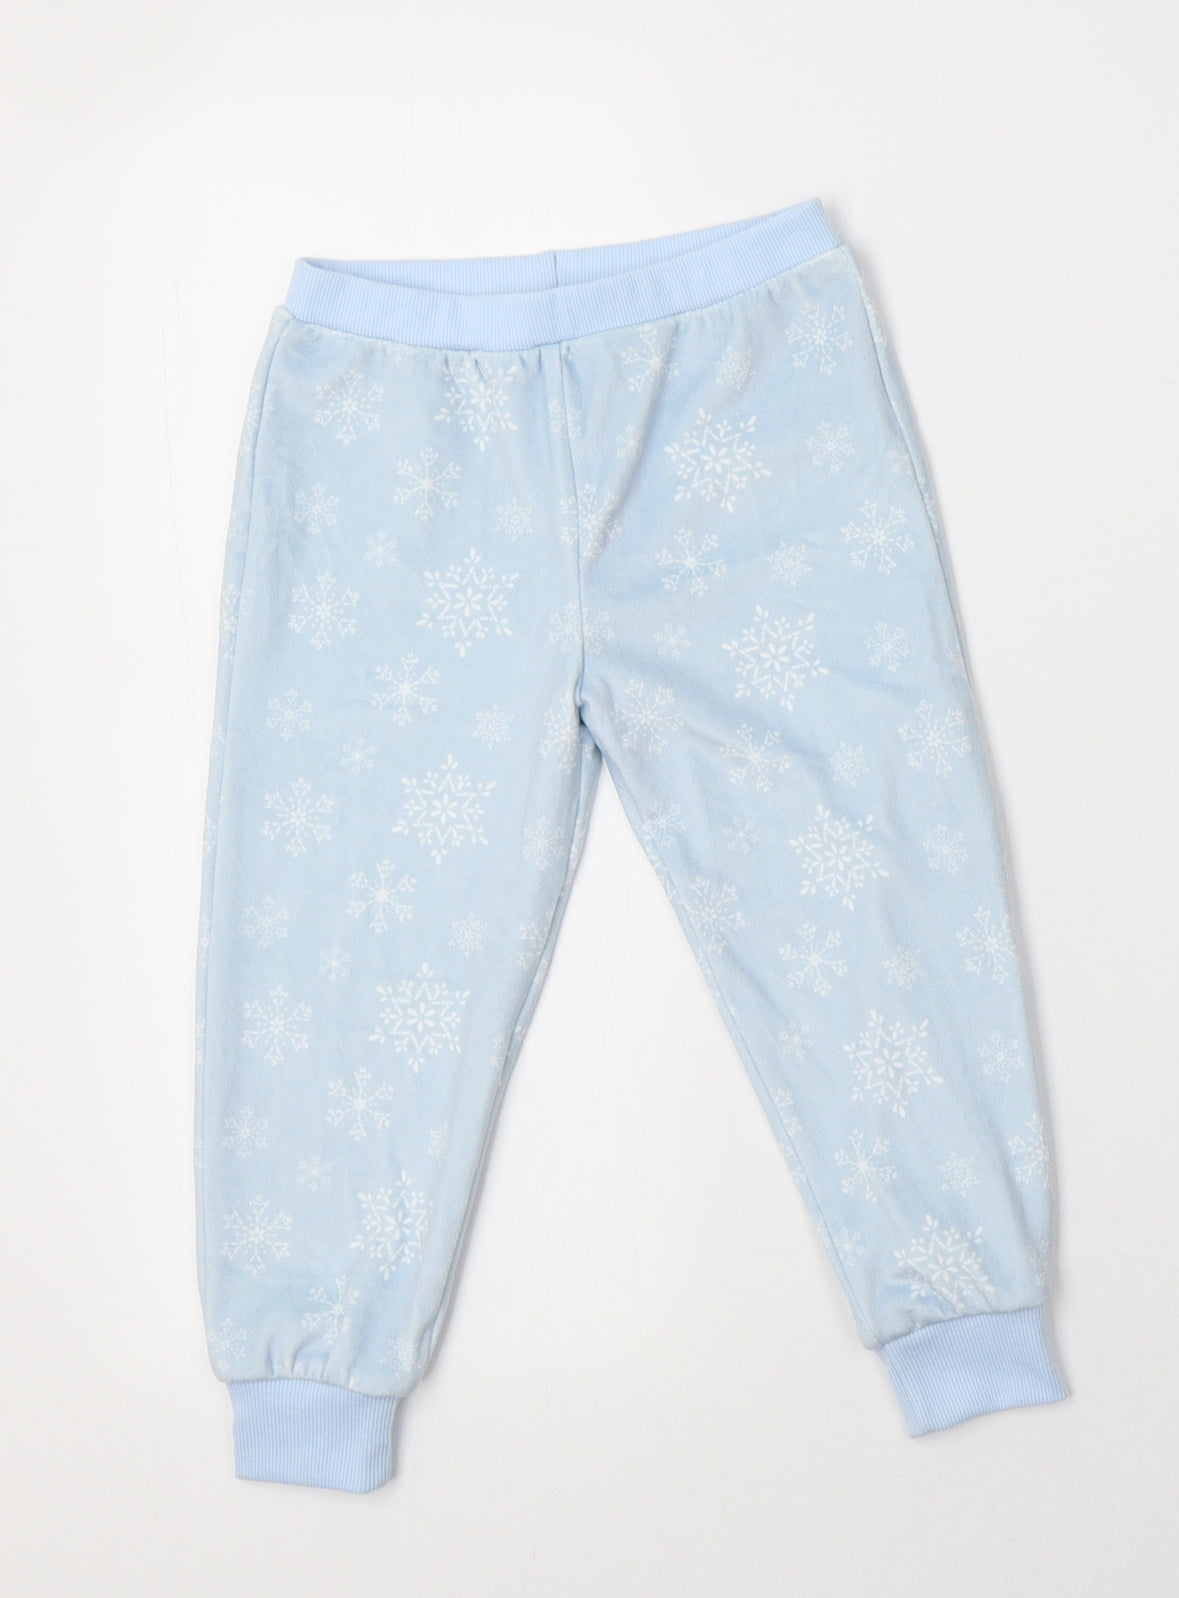 F&F Girls Blue  Polyester  Pyjama Pants Size 2-3 Years   - Snowflake Print